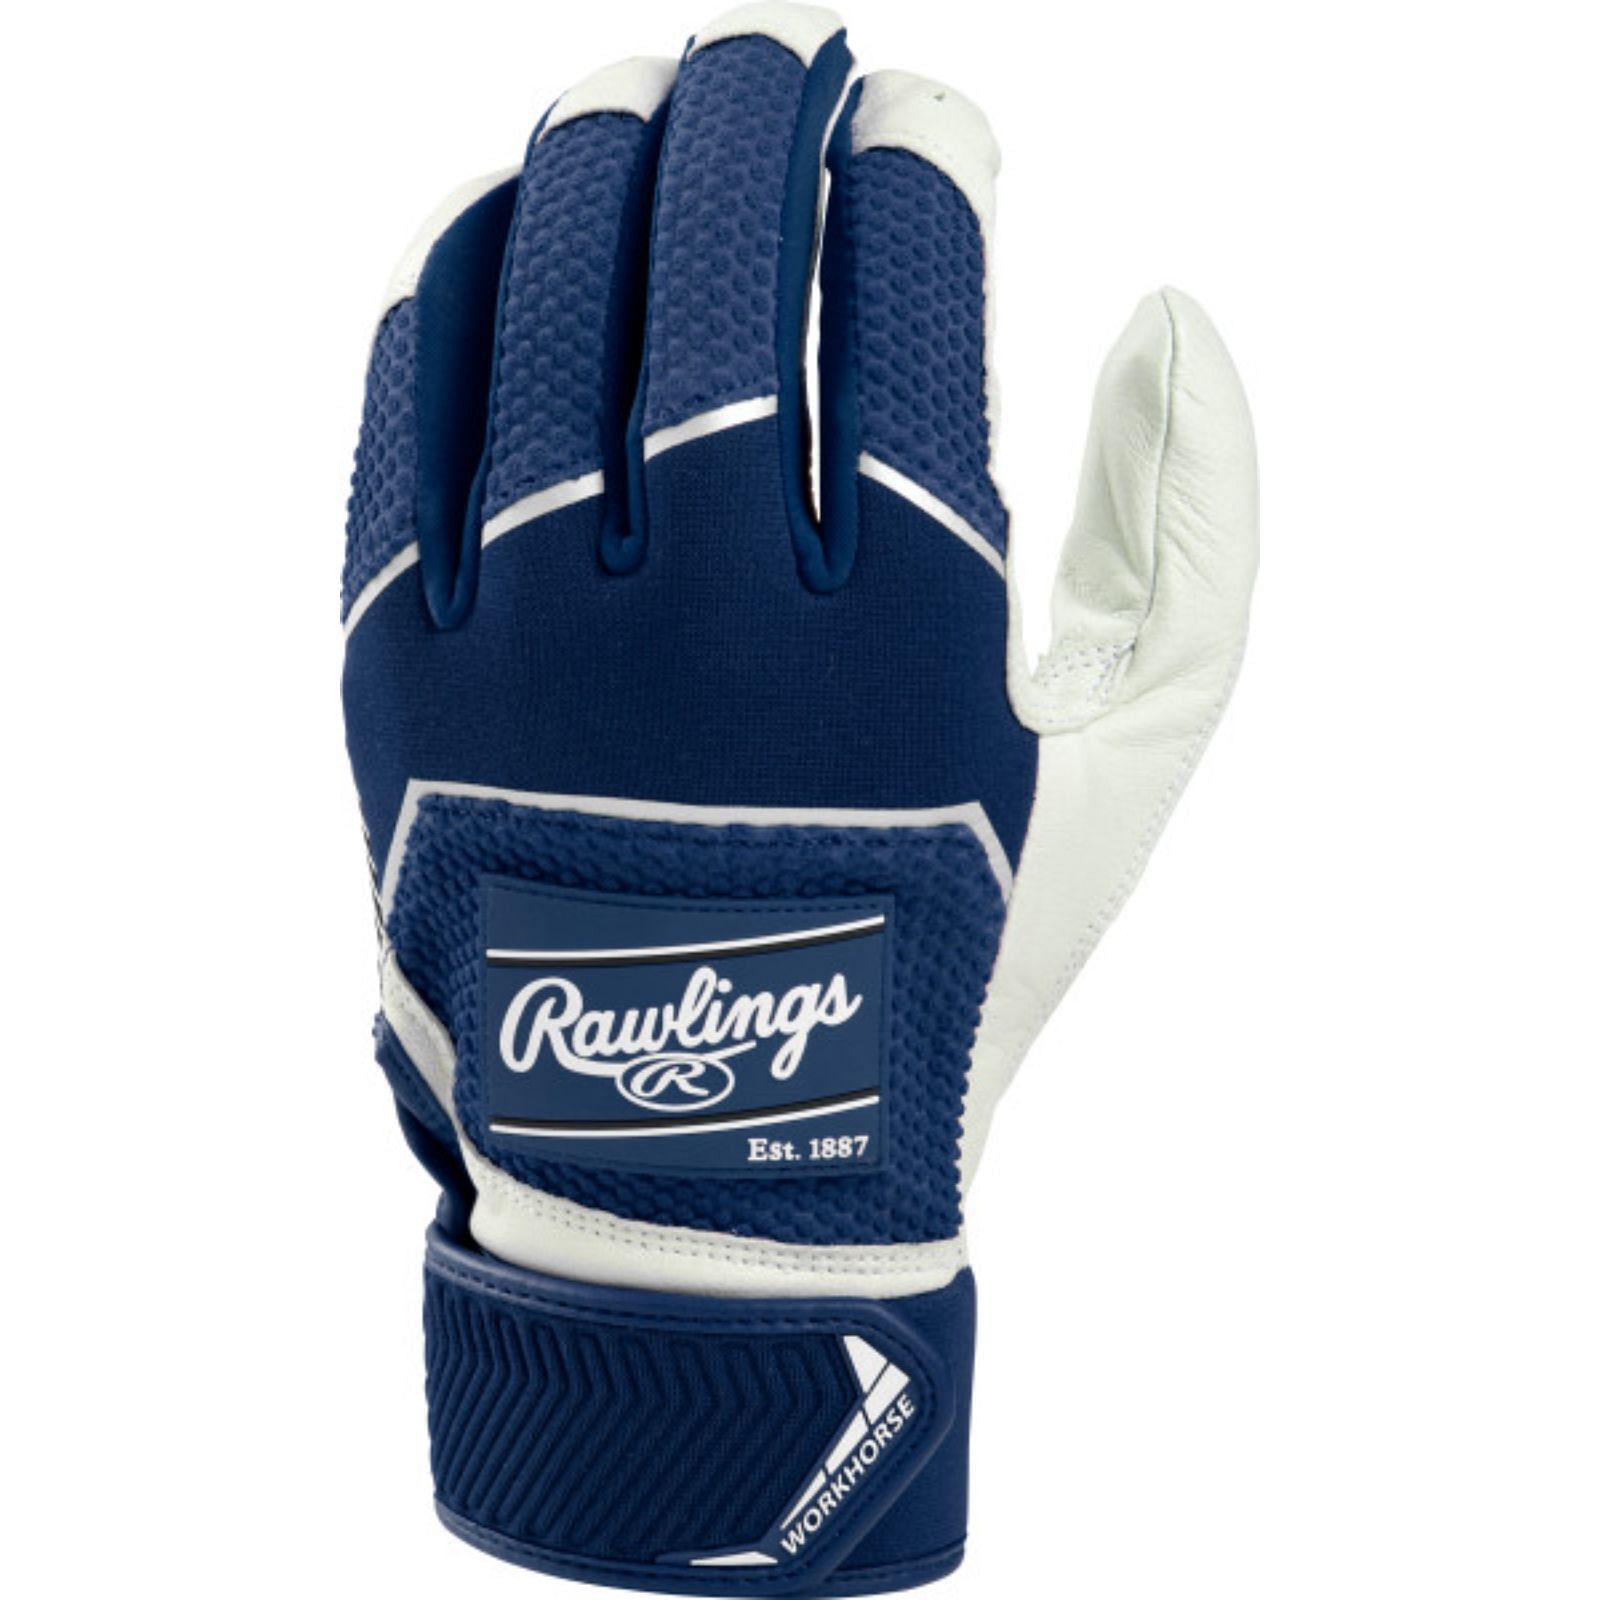 rawlings workhorse batting glove